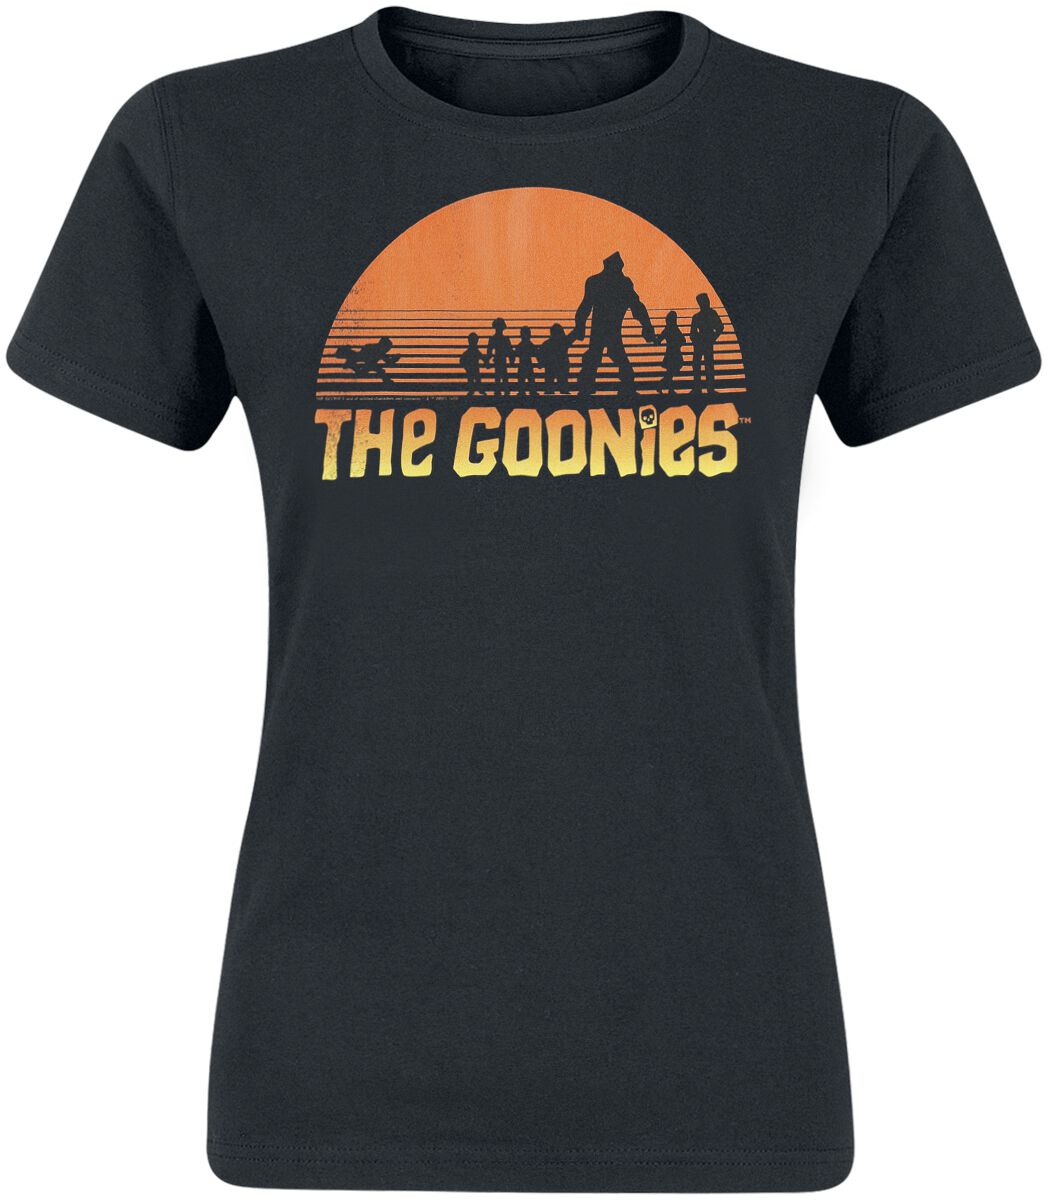 The Goonies Sunset Group T-Shirt black